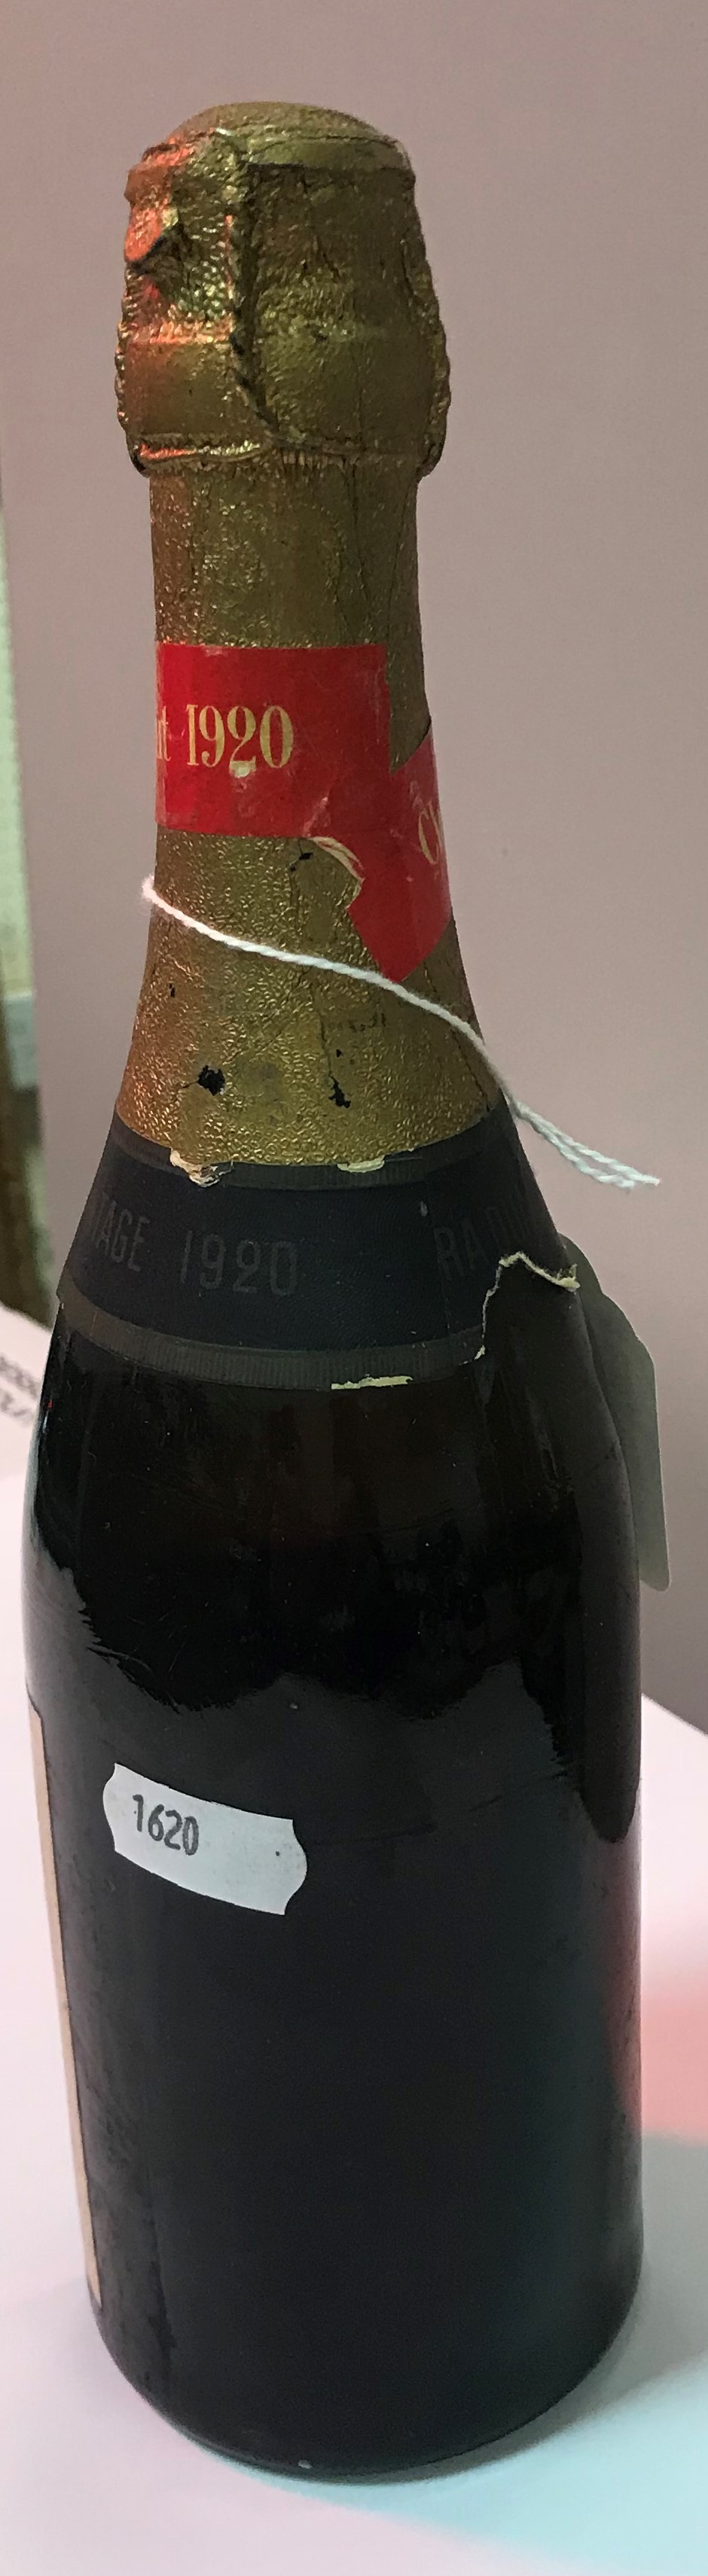 One three quarter bottle Charles Heidsieck Champagne 1920, - Image 8 of 10